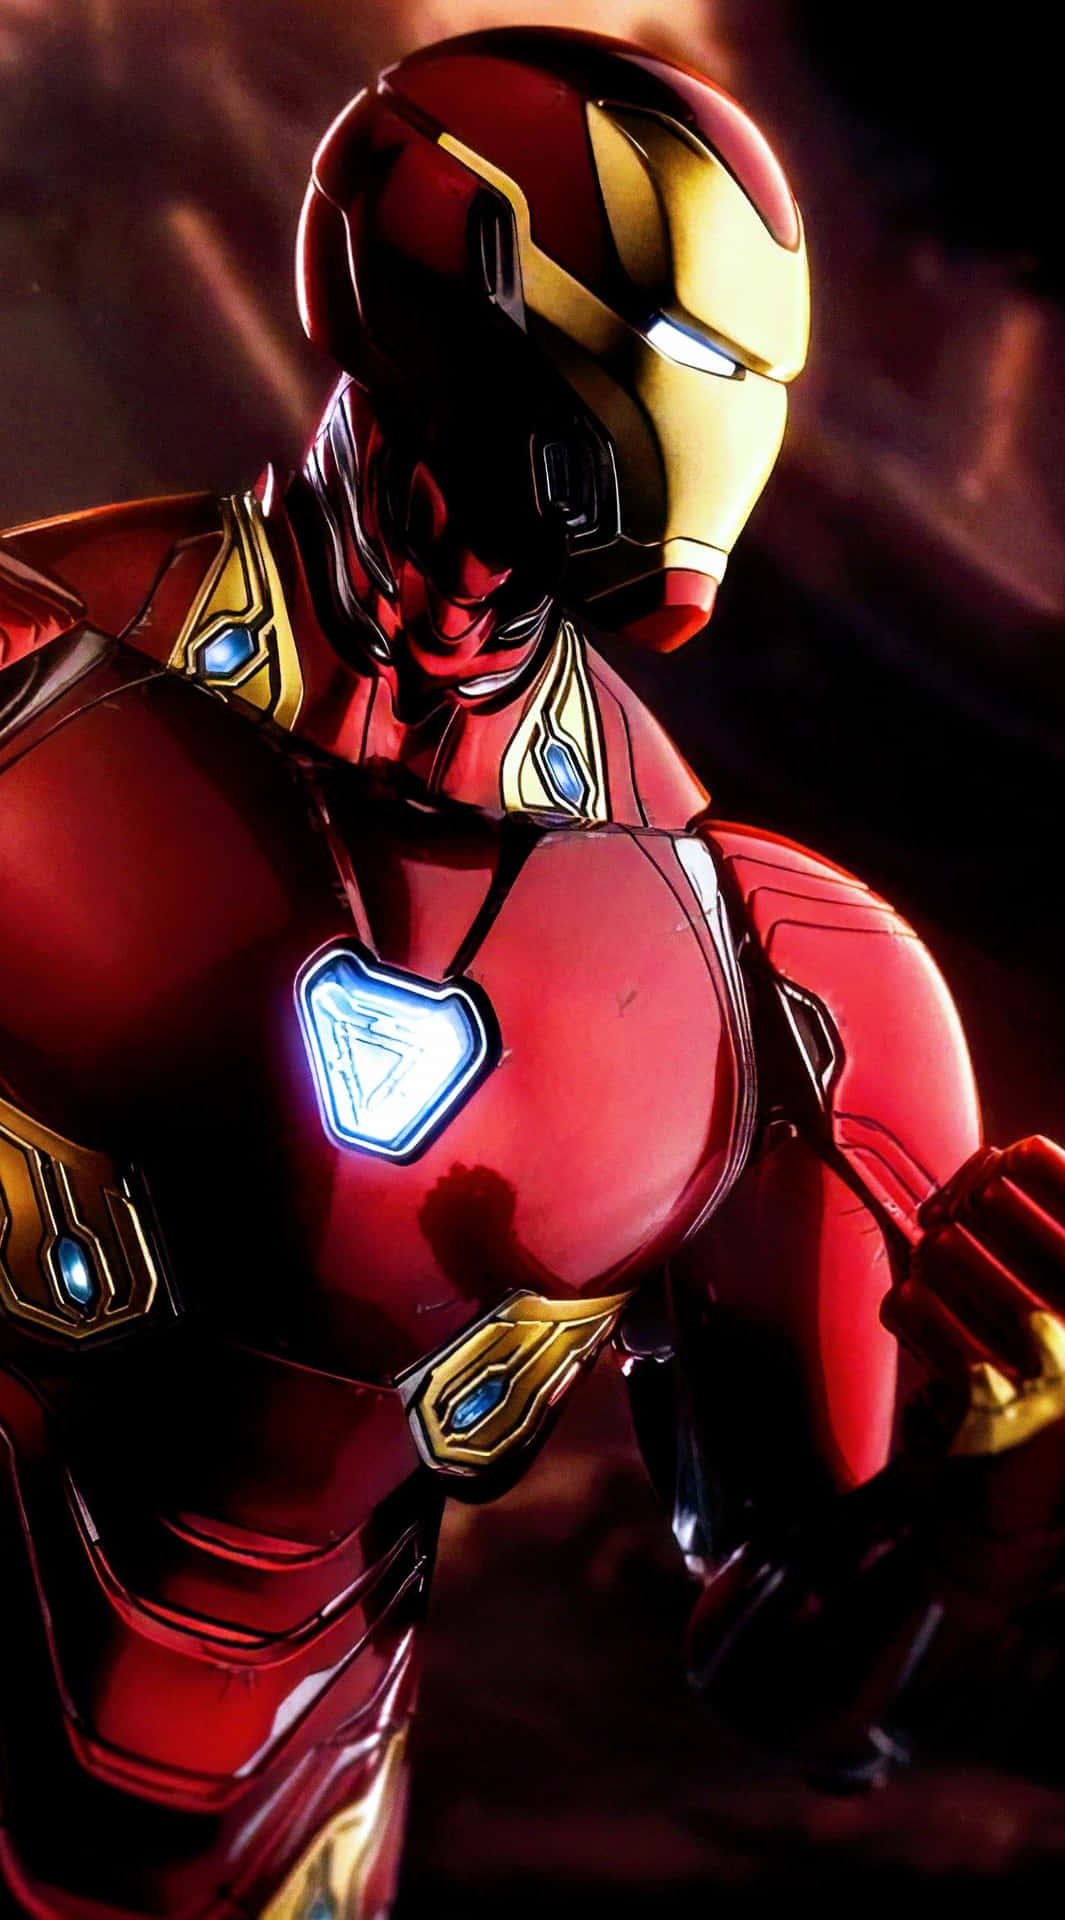 Imagende Arte Digital Estética De Iron Man En Rojo